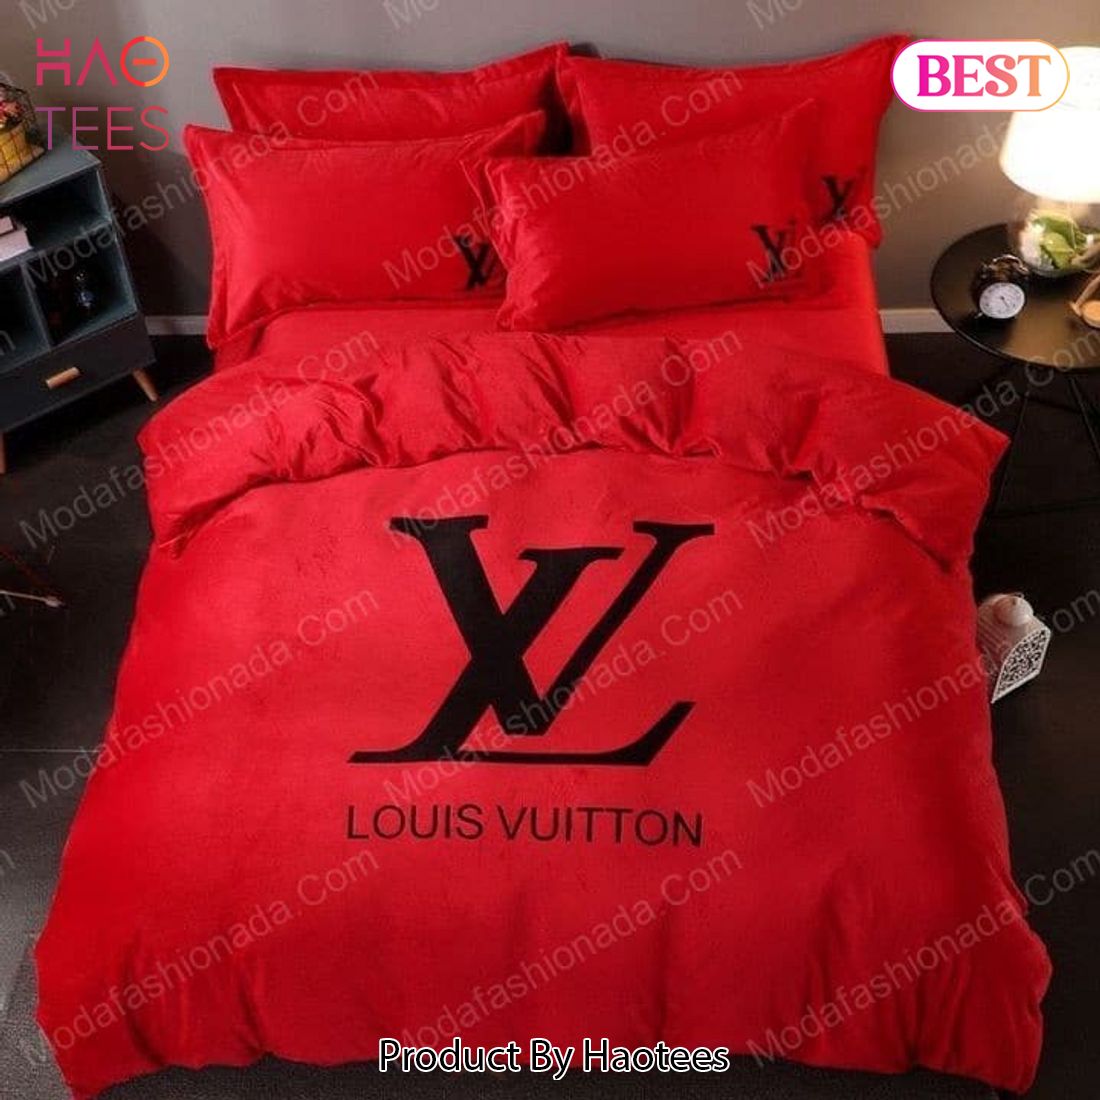 Louis vuitton lv logo type 3824 Bedding Sets covers bedclothes